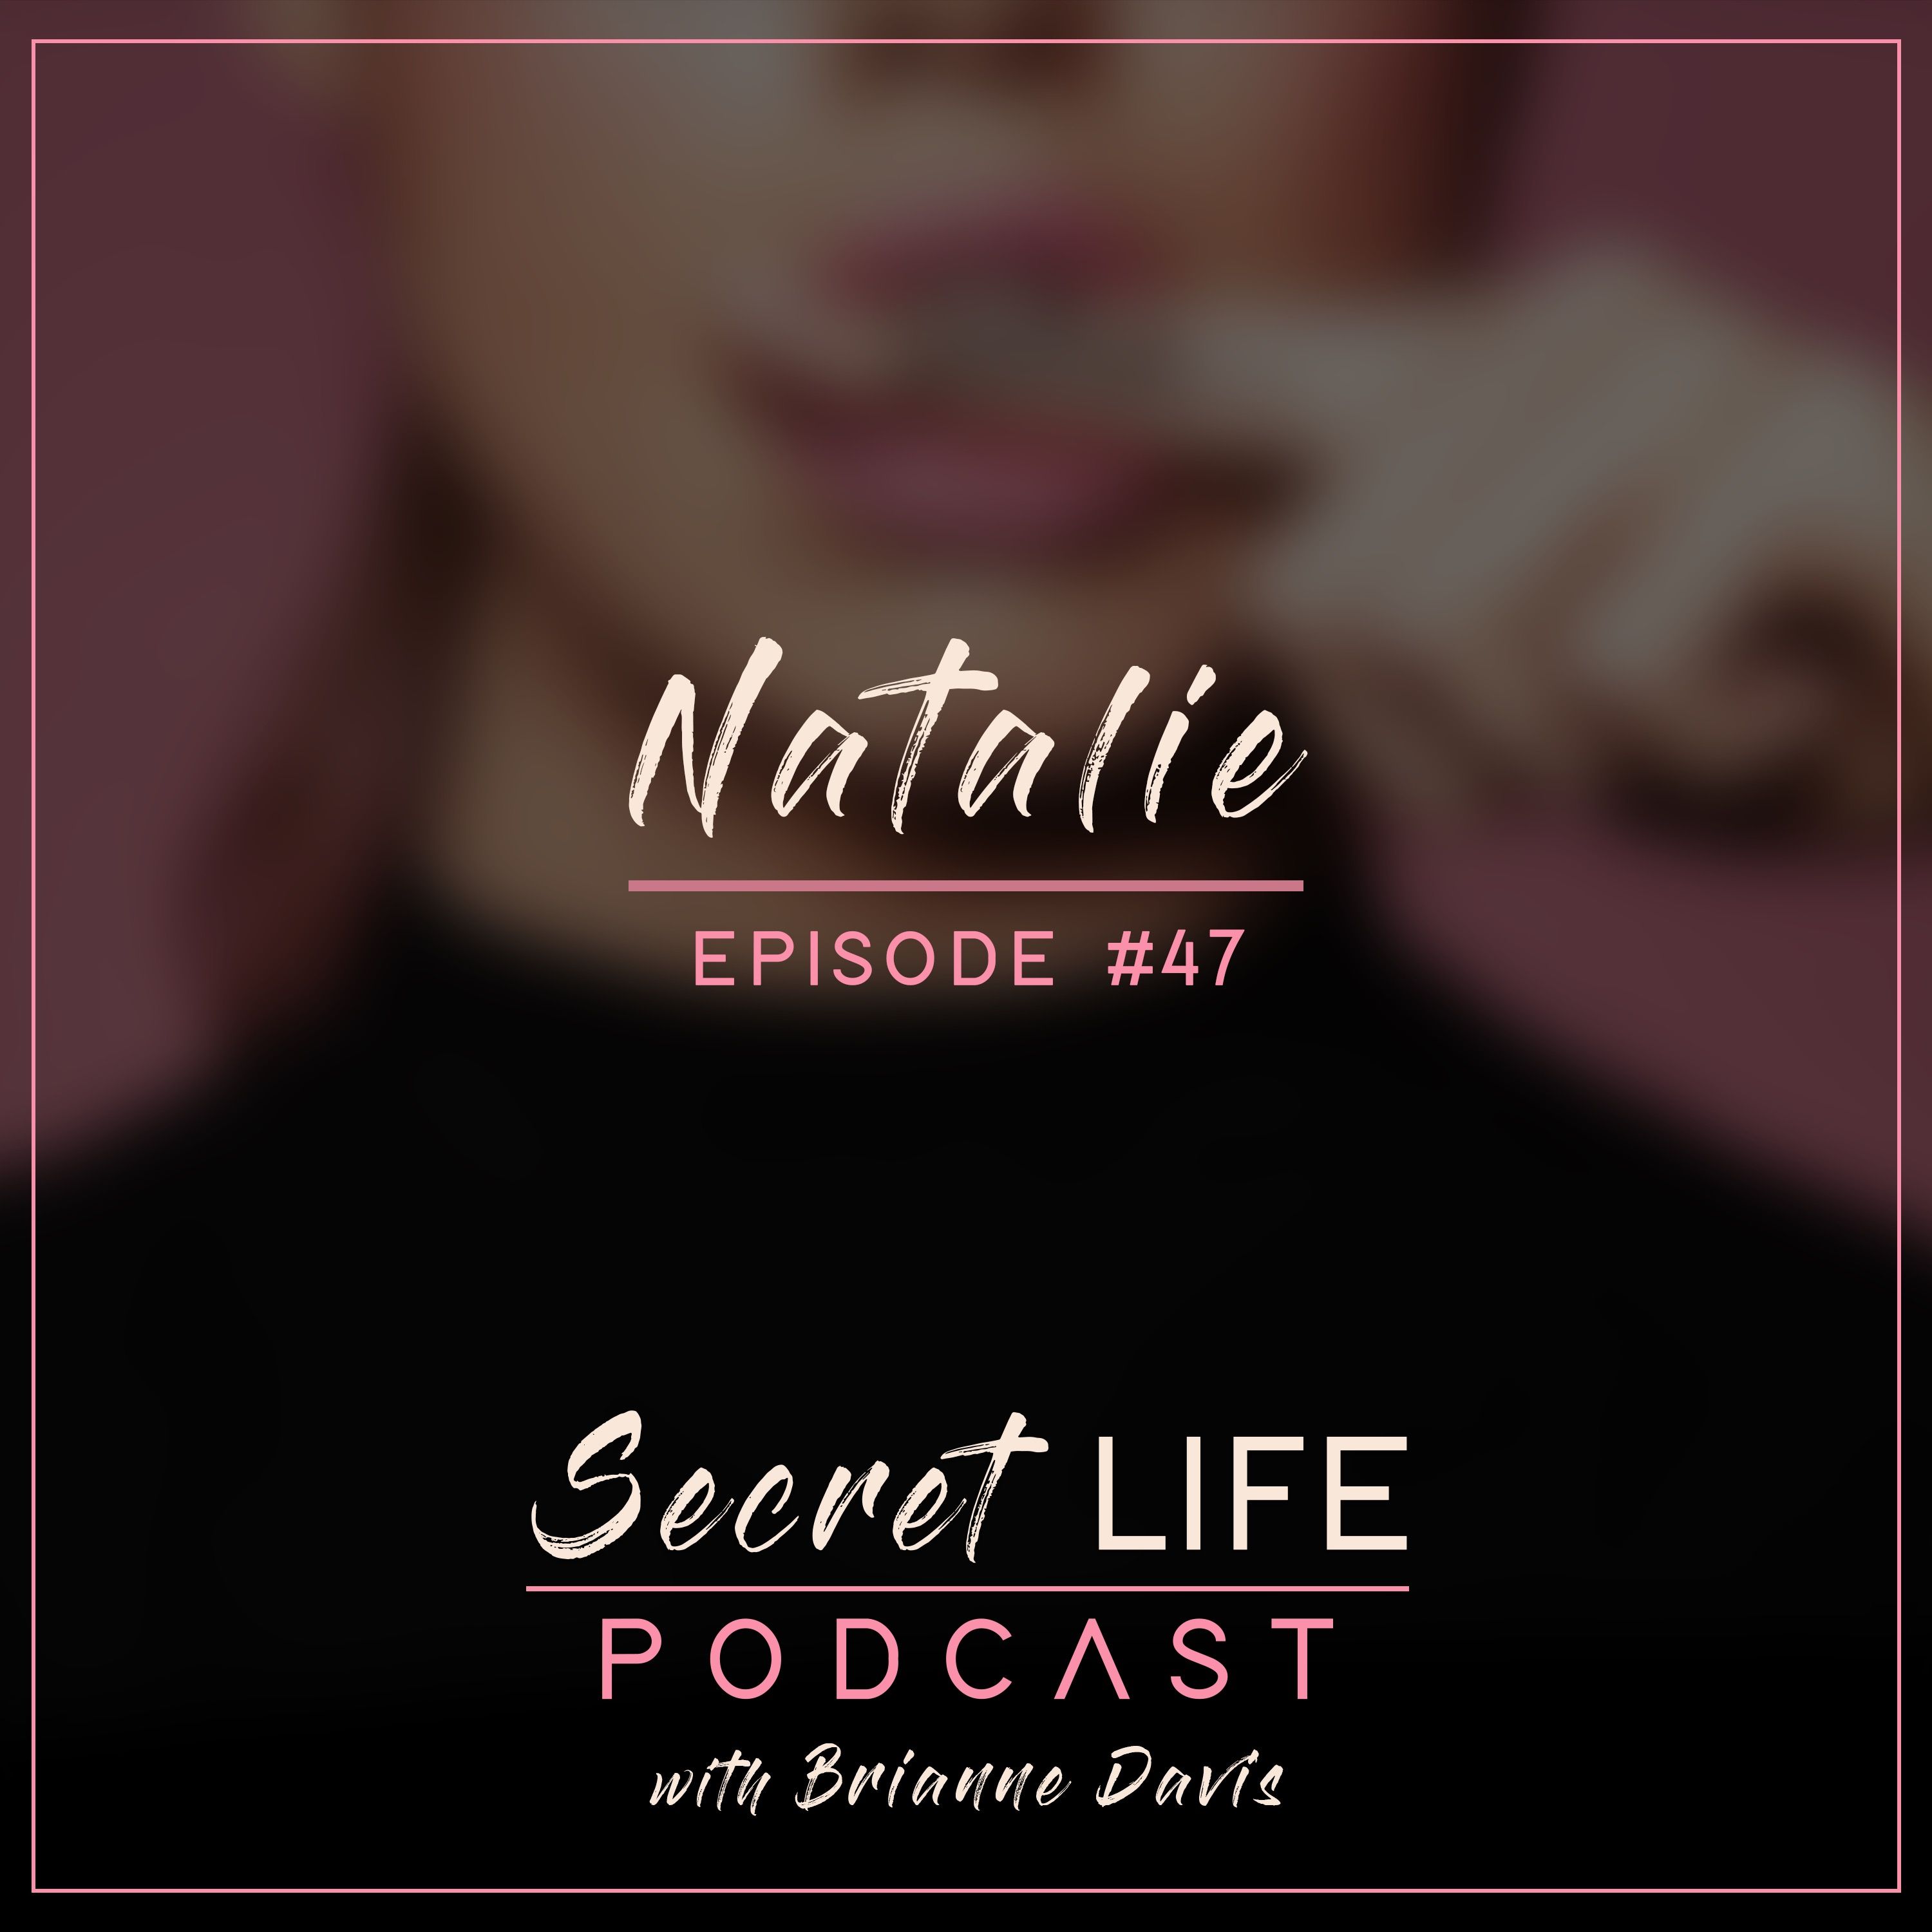 Natalie: Secrets Led Me To Prison 5 Times